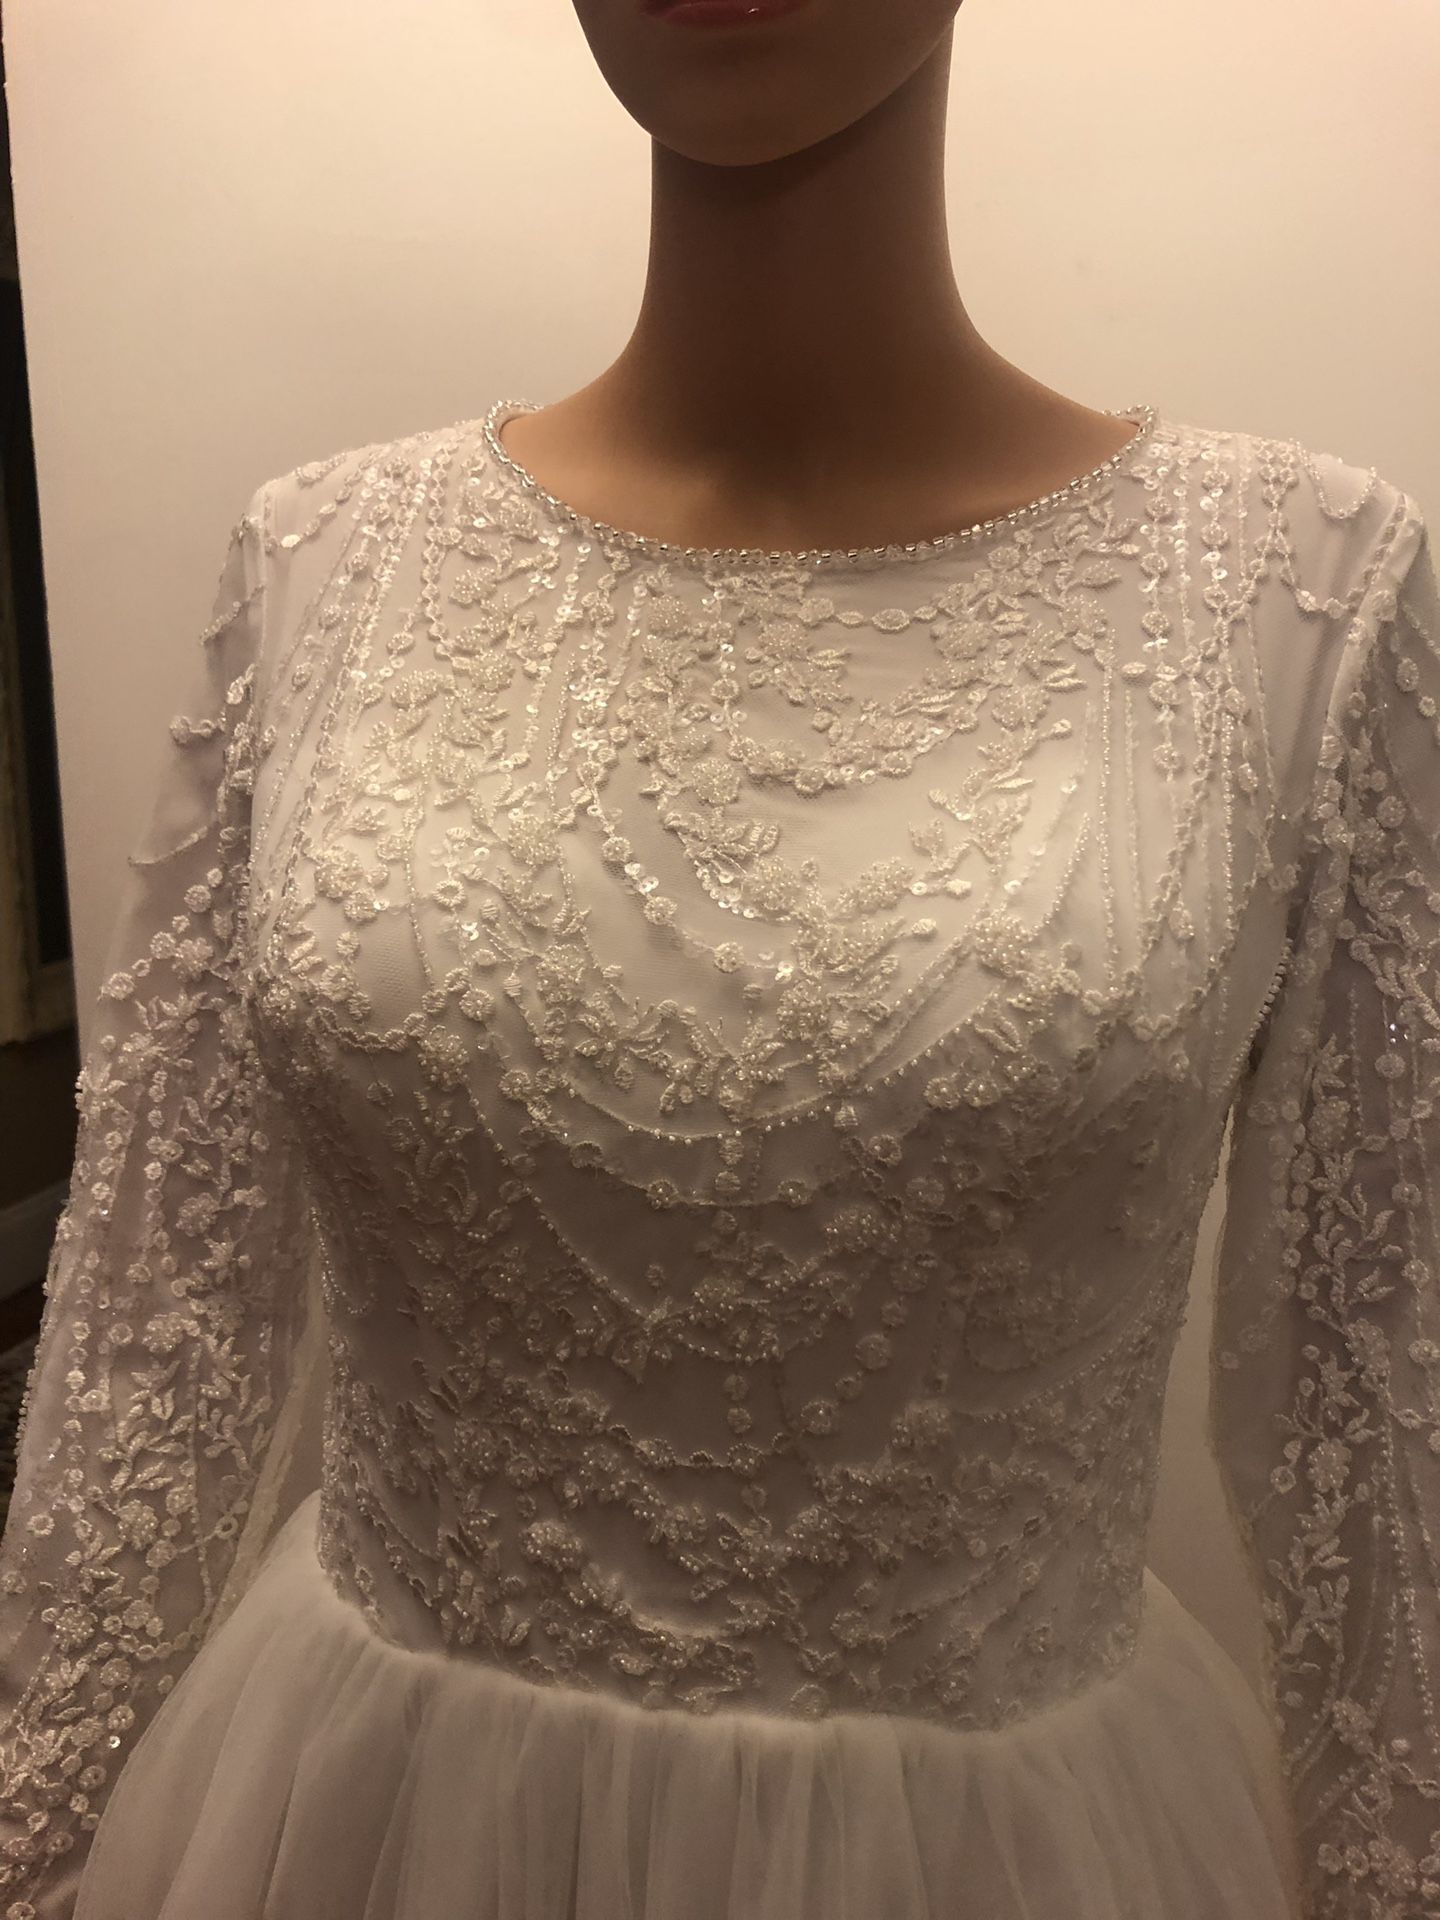 Brand new wedding dress for sale